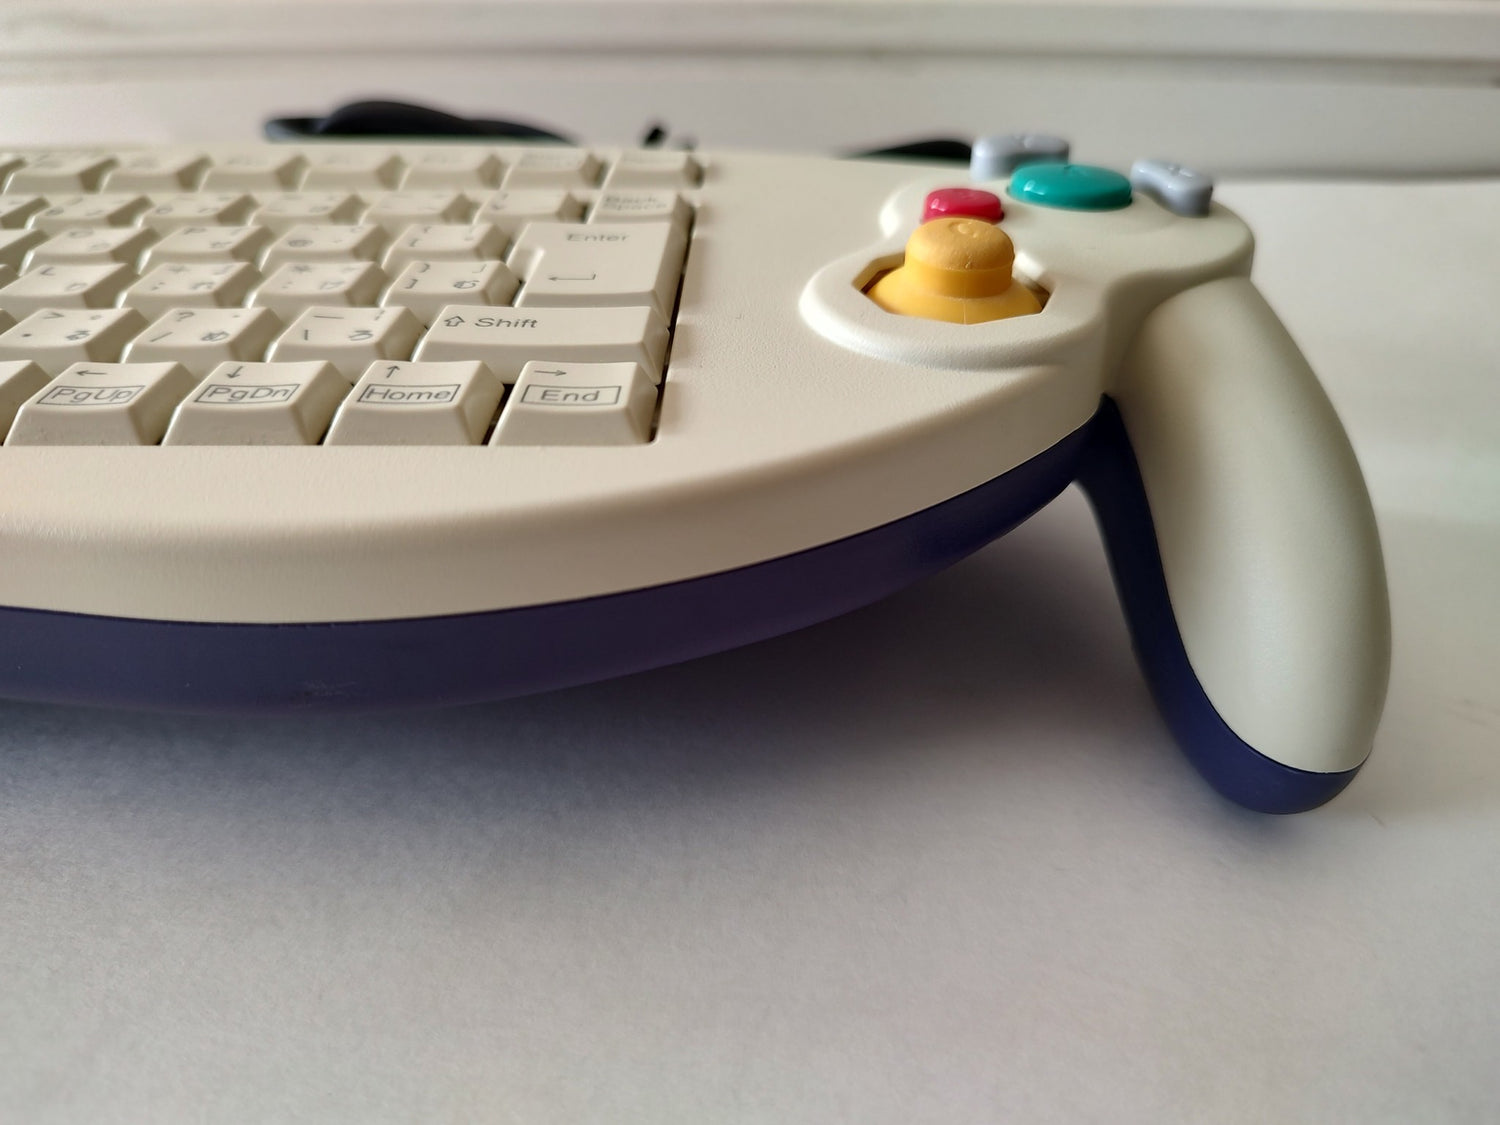 Nintendo GameCube ASCII keyboard Controller ACS-1901PO, not tested